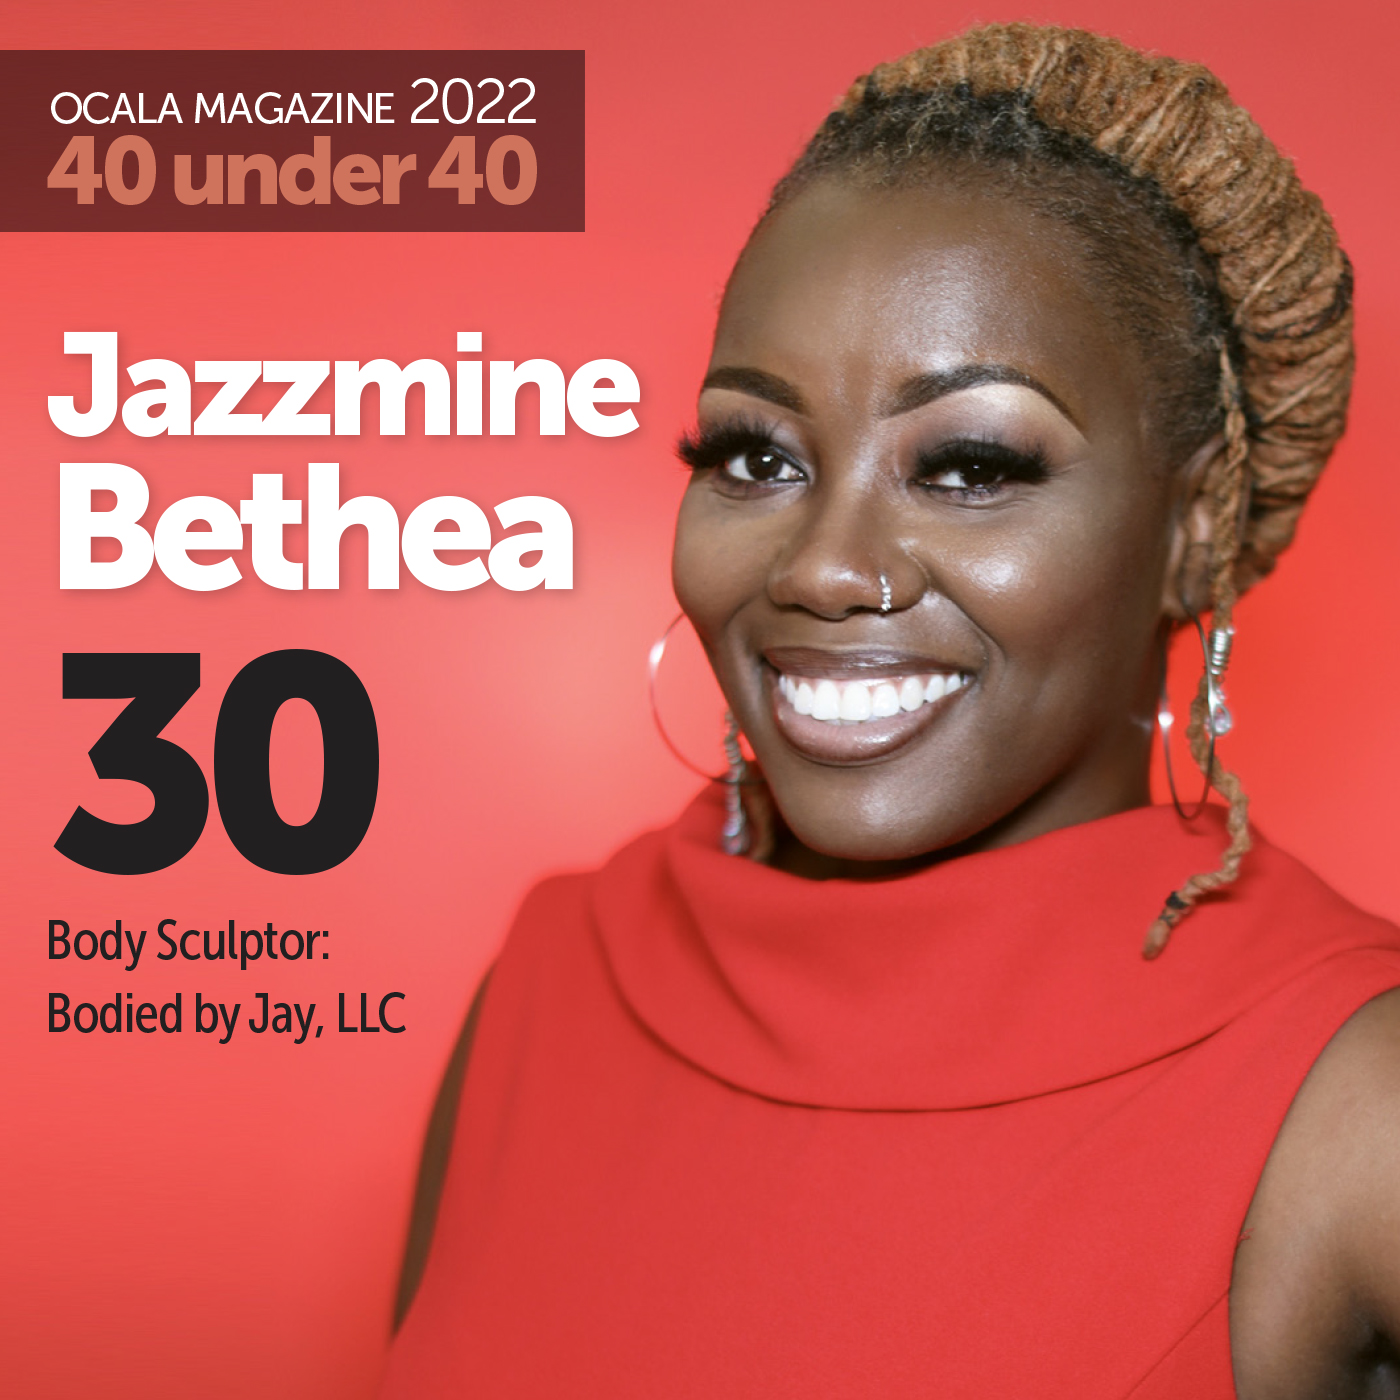 Jazzmine Bethea Ocala Magazine 2022 40 under 40